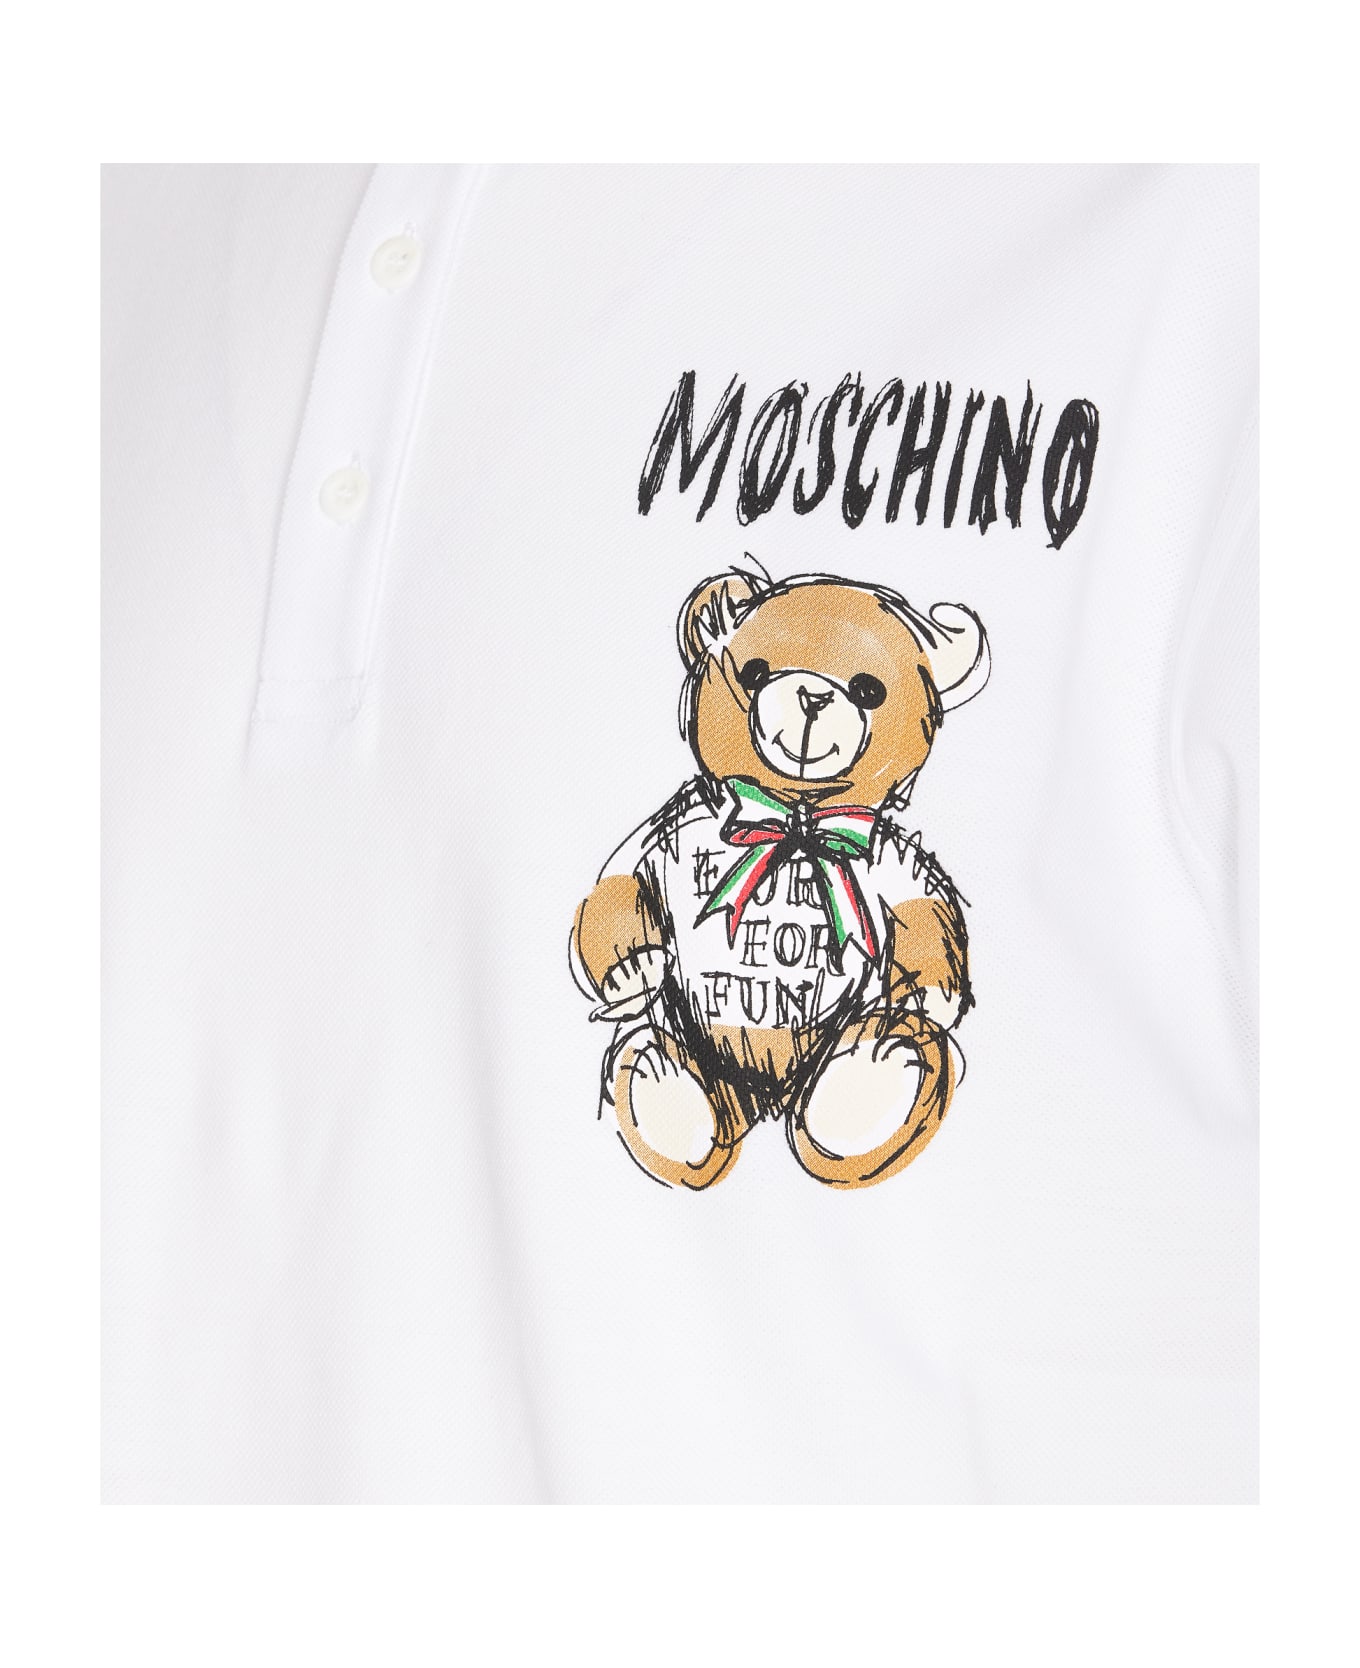 Moschino Drawn Teddy Bear Polo Shirt - White